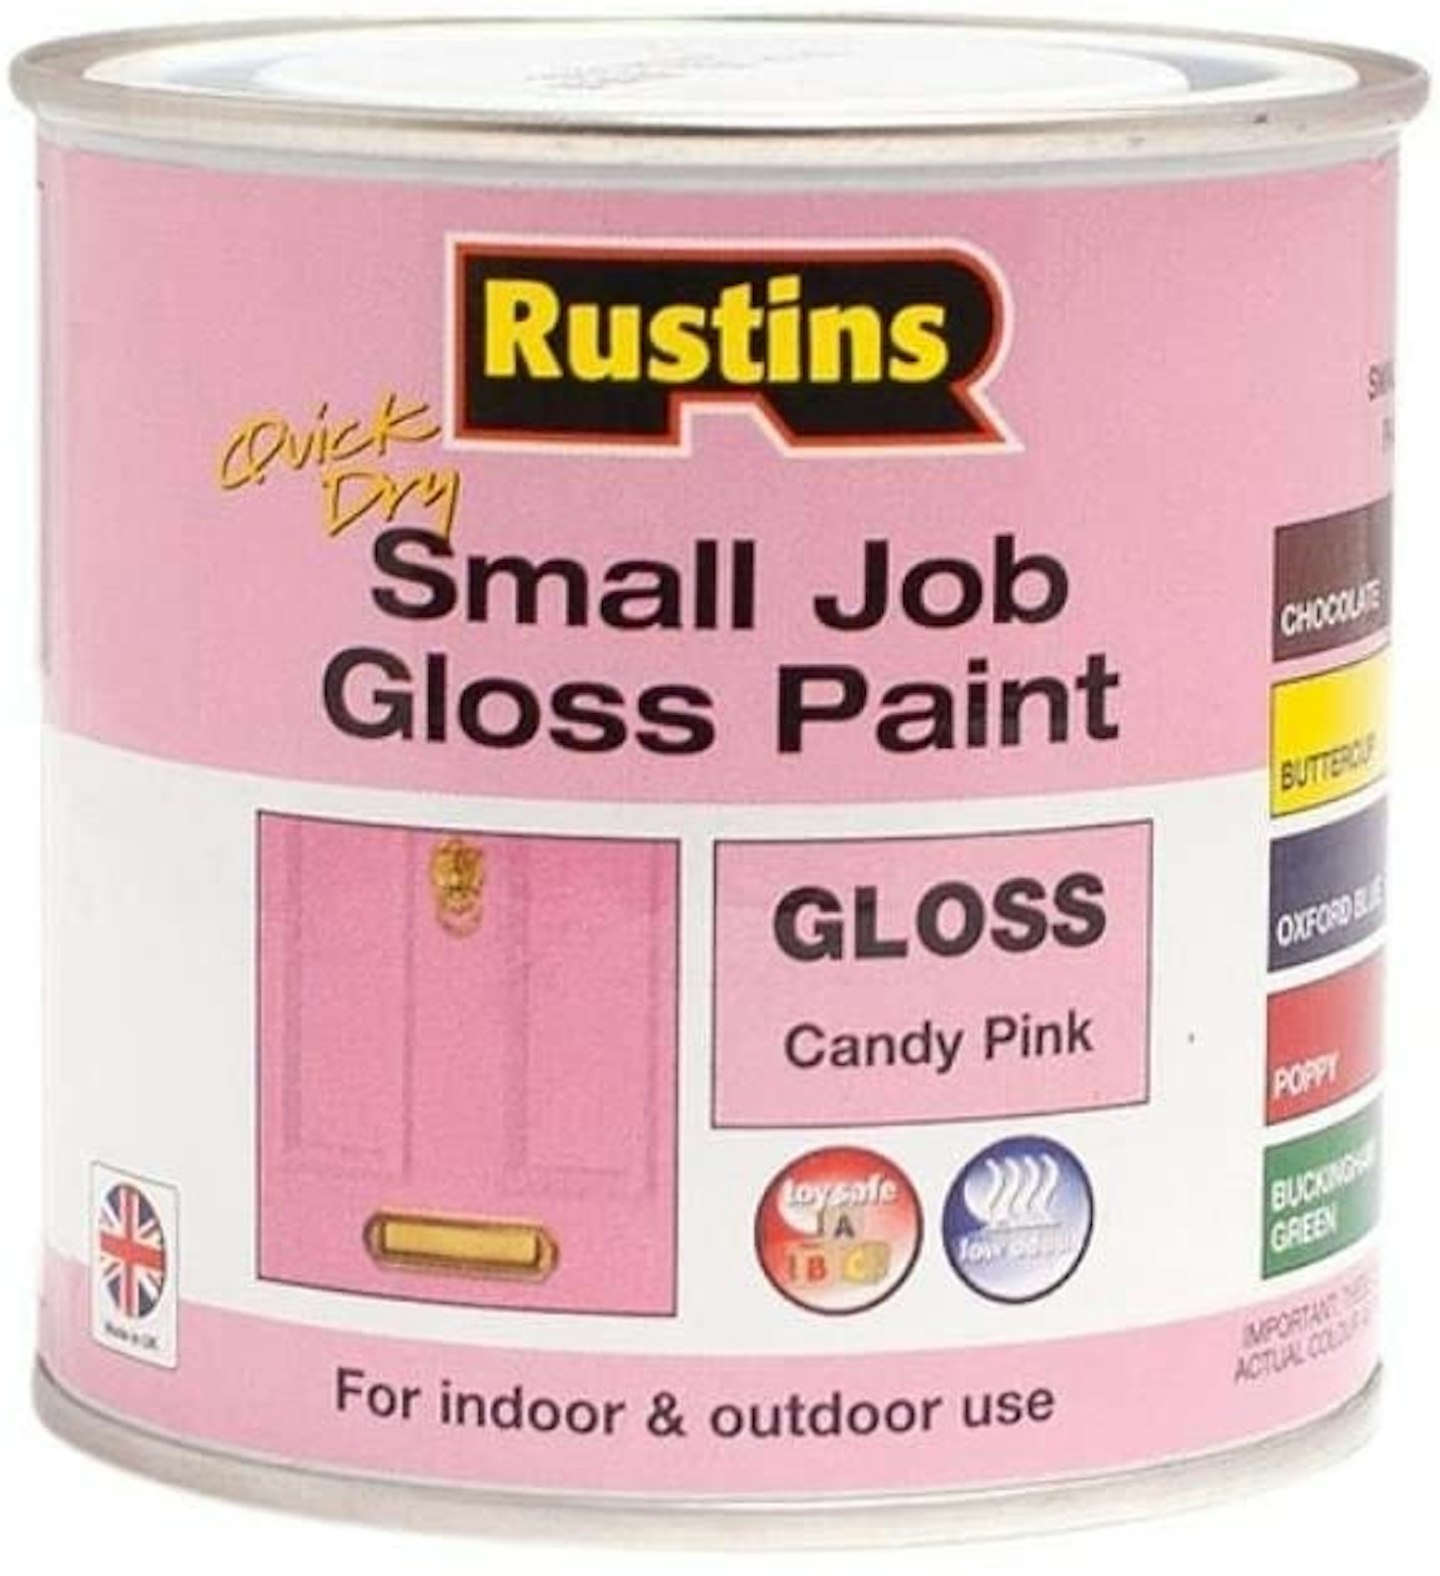 Rustins Small Job gloss paint